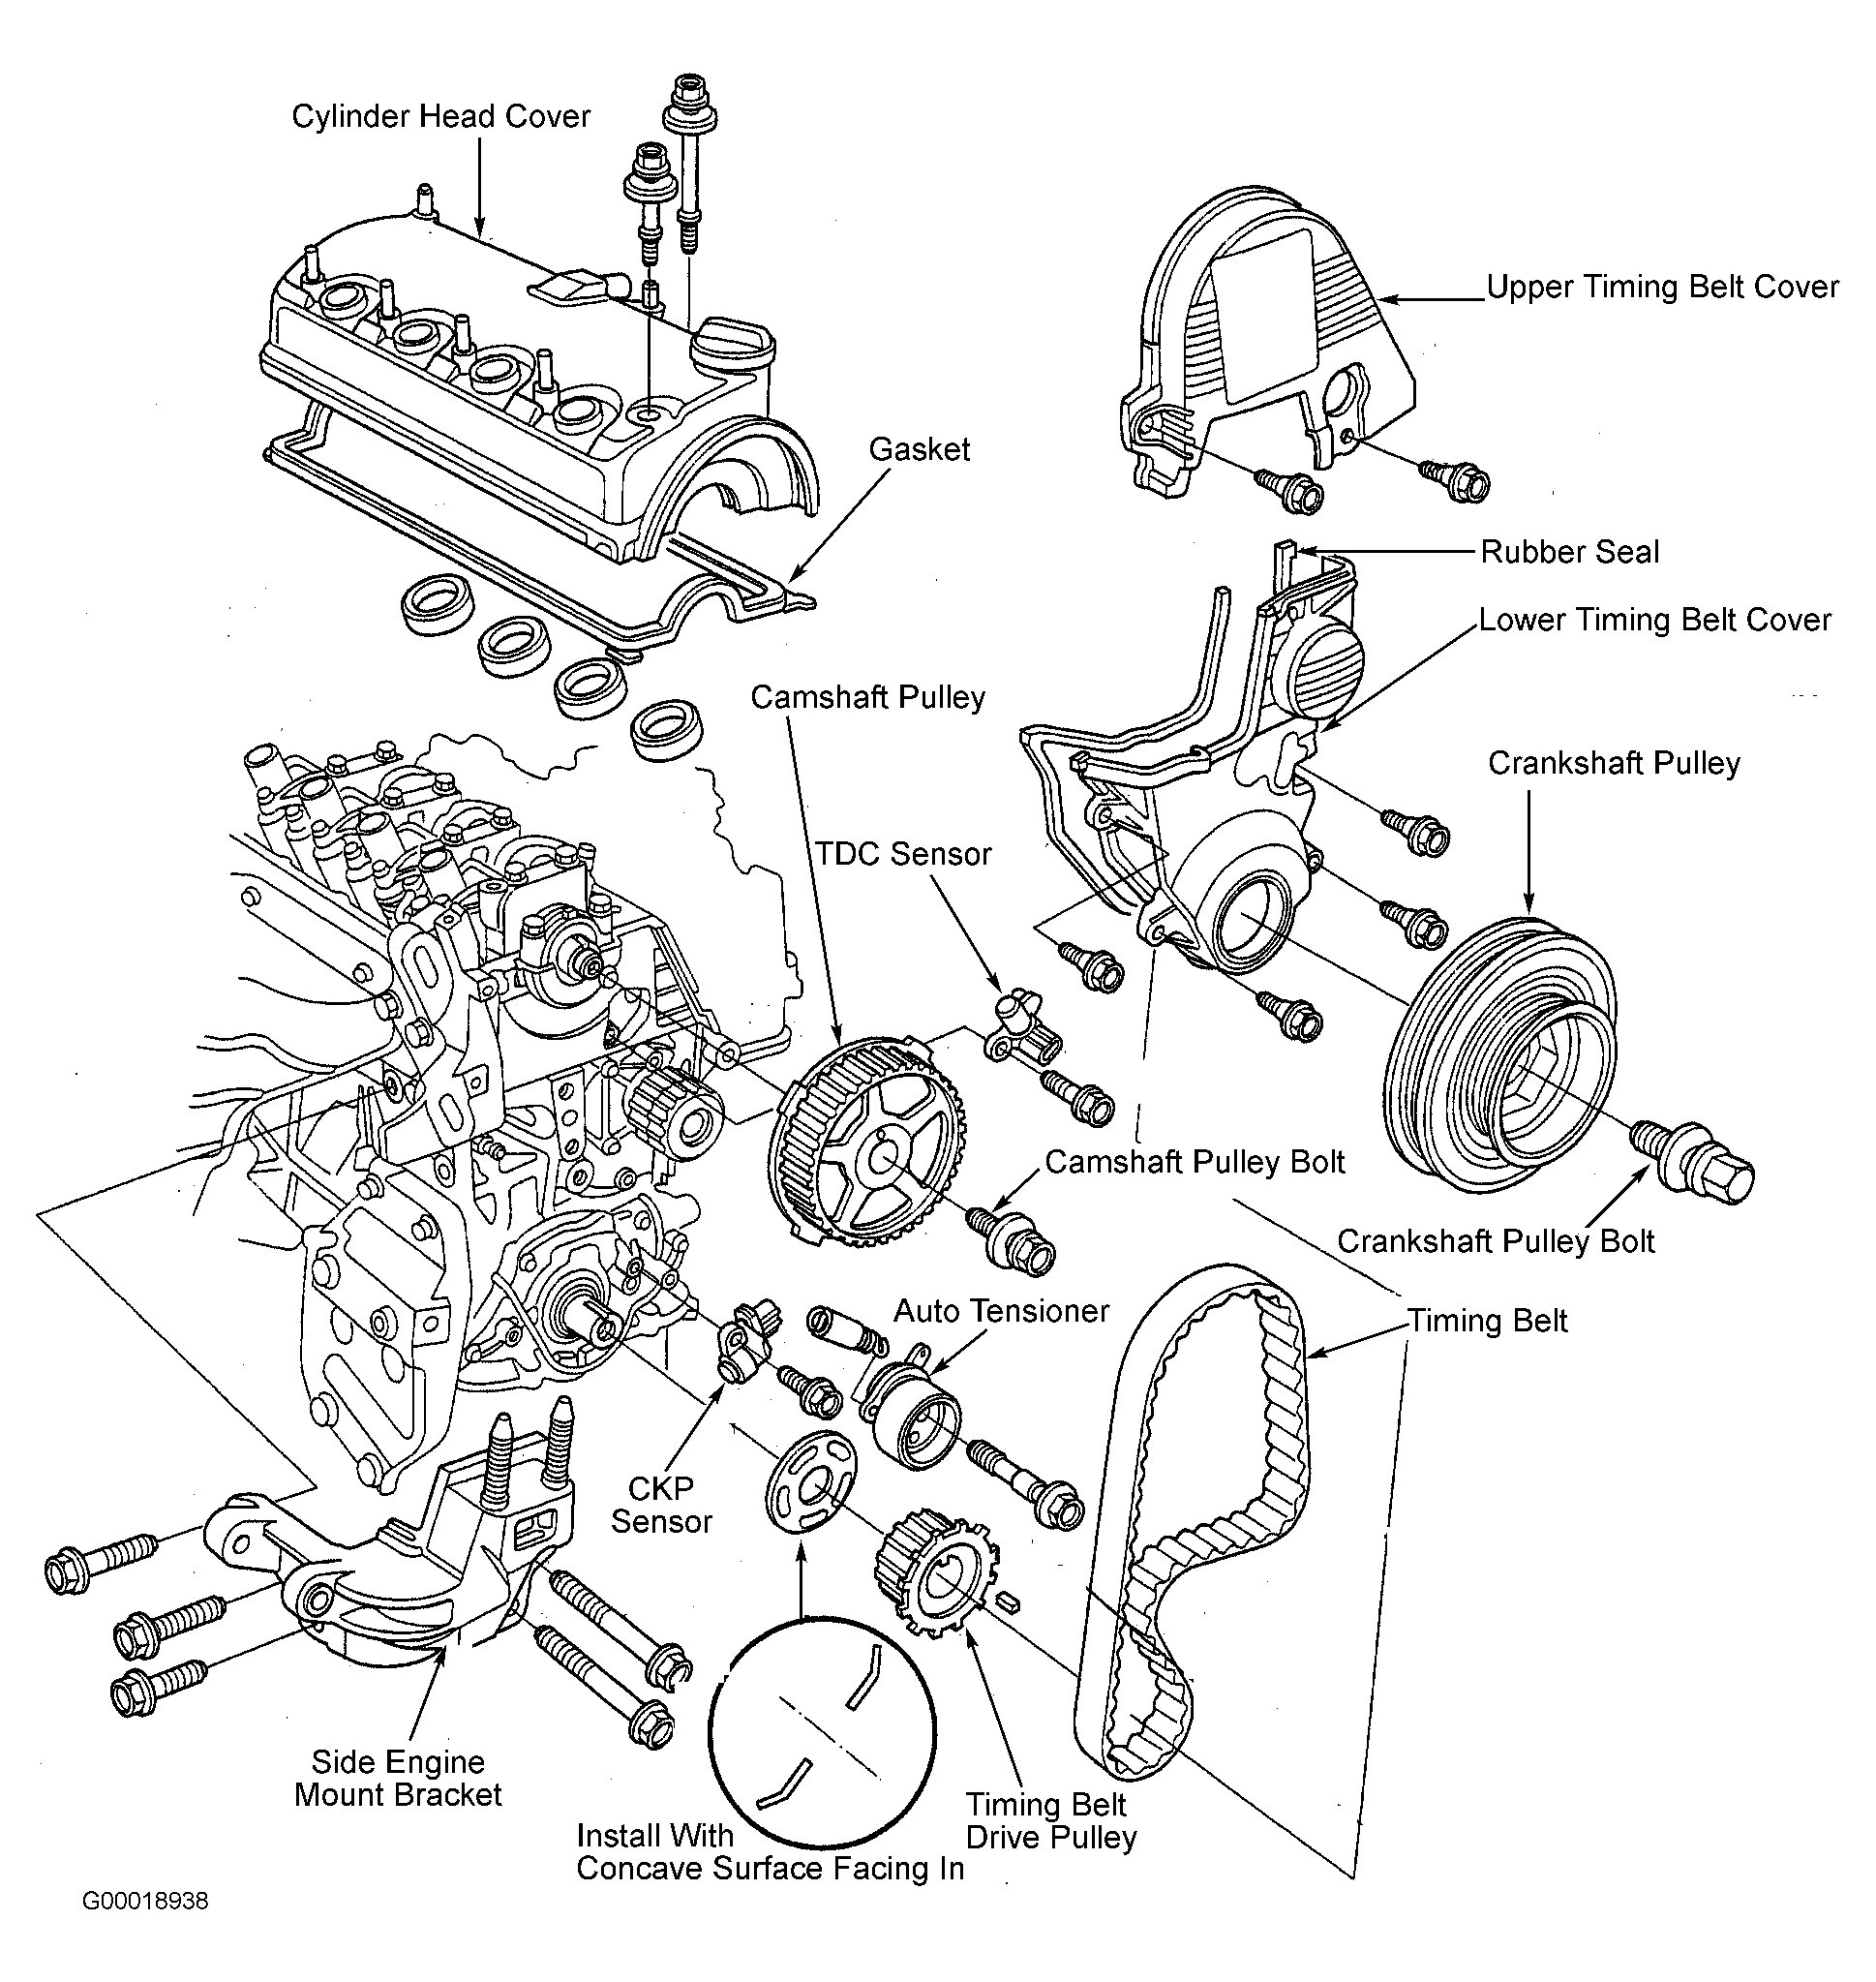 2003 Chevy Trailblazer Parts Diagram 2003 Trailblazer Parts Diagram Information Wiring Diagram • Of 2003 Chevy Trailblazer Parts Diagram